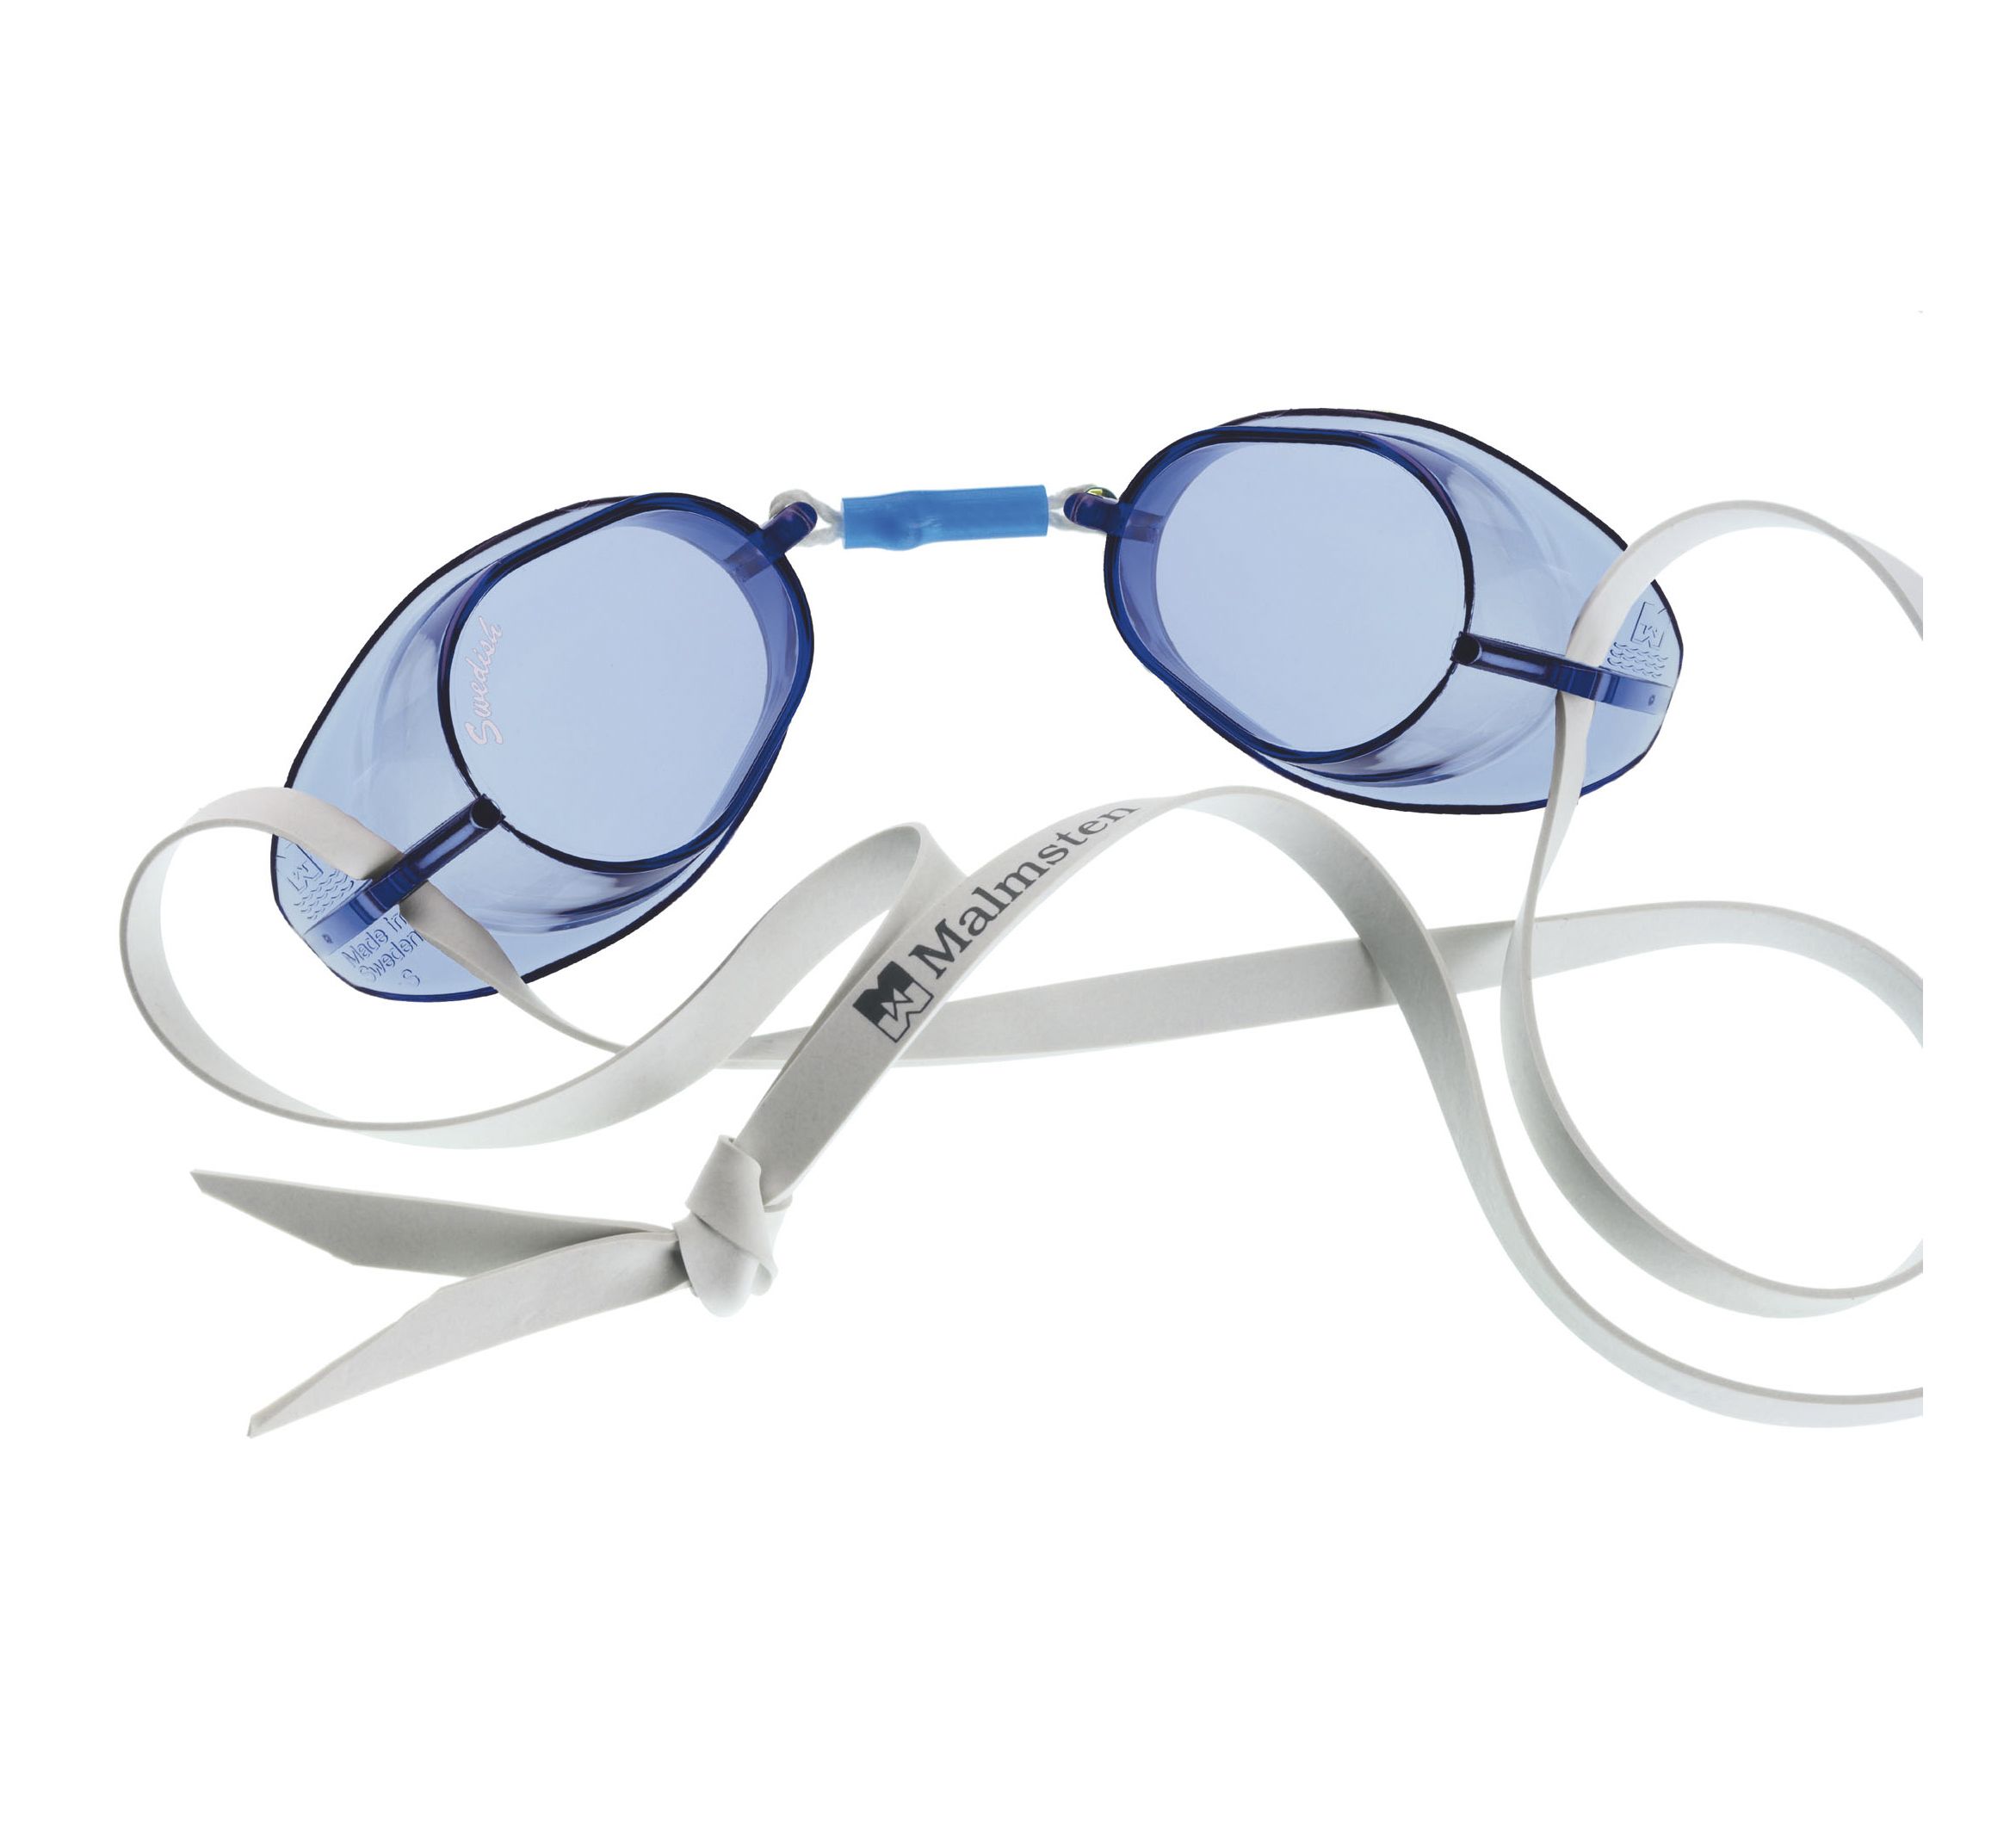 Beco очки-шведки для плавания